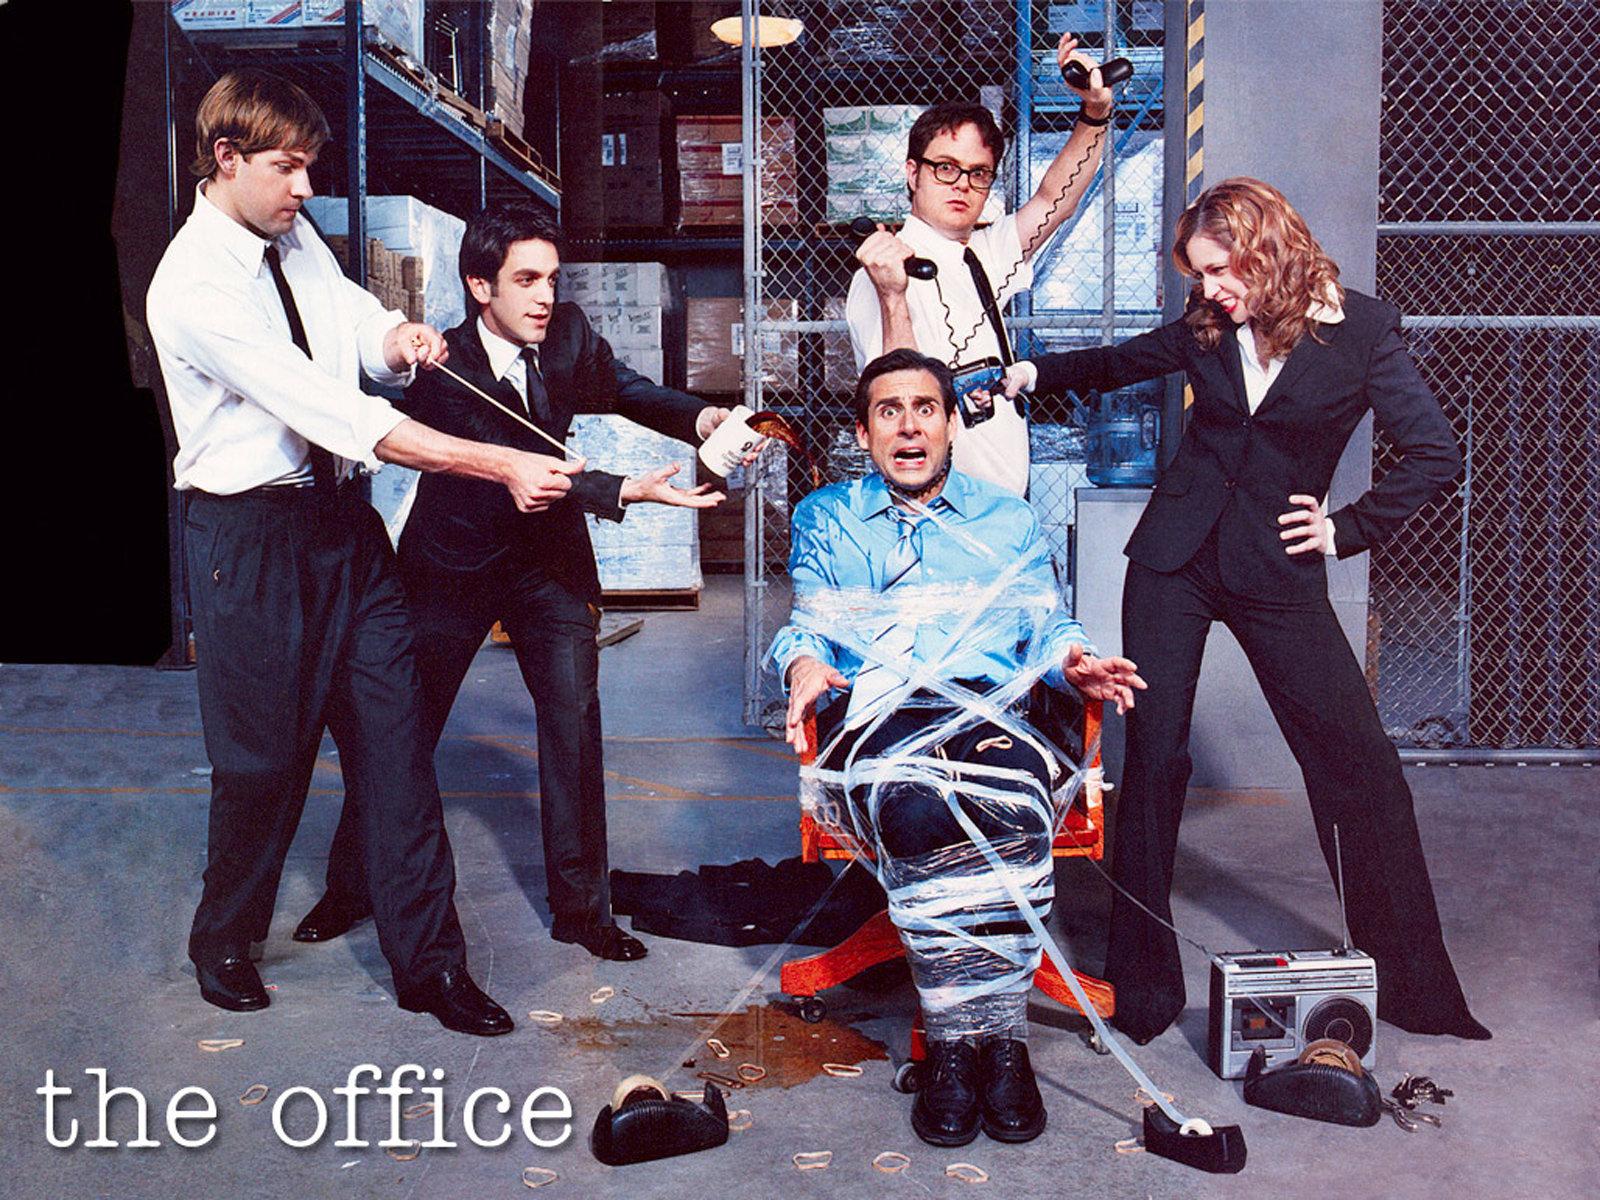 The Office (US) wallpaper HD for desktop background